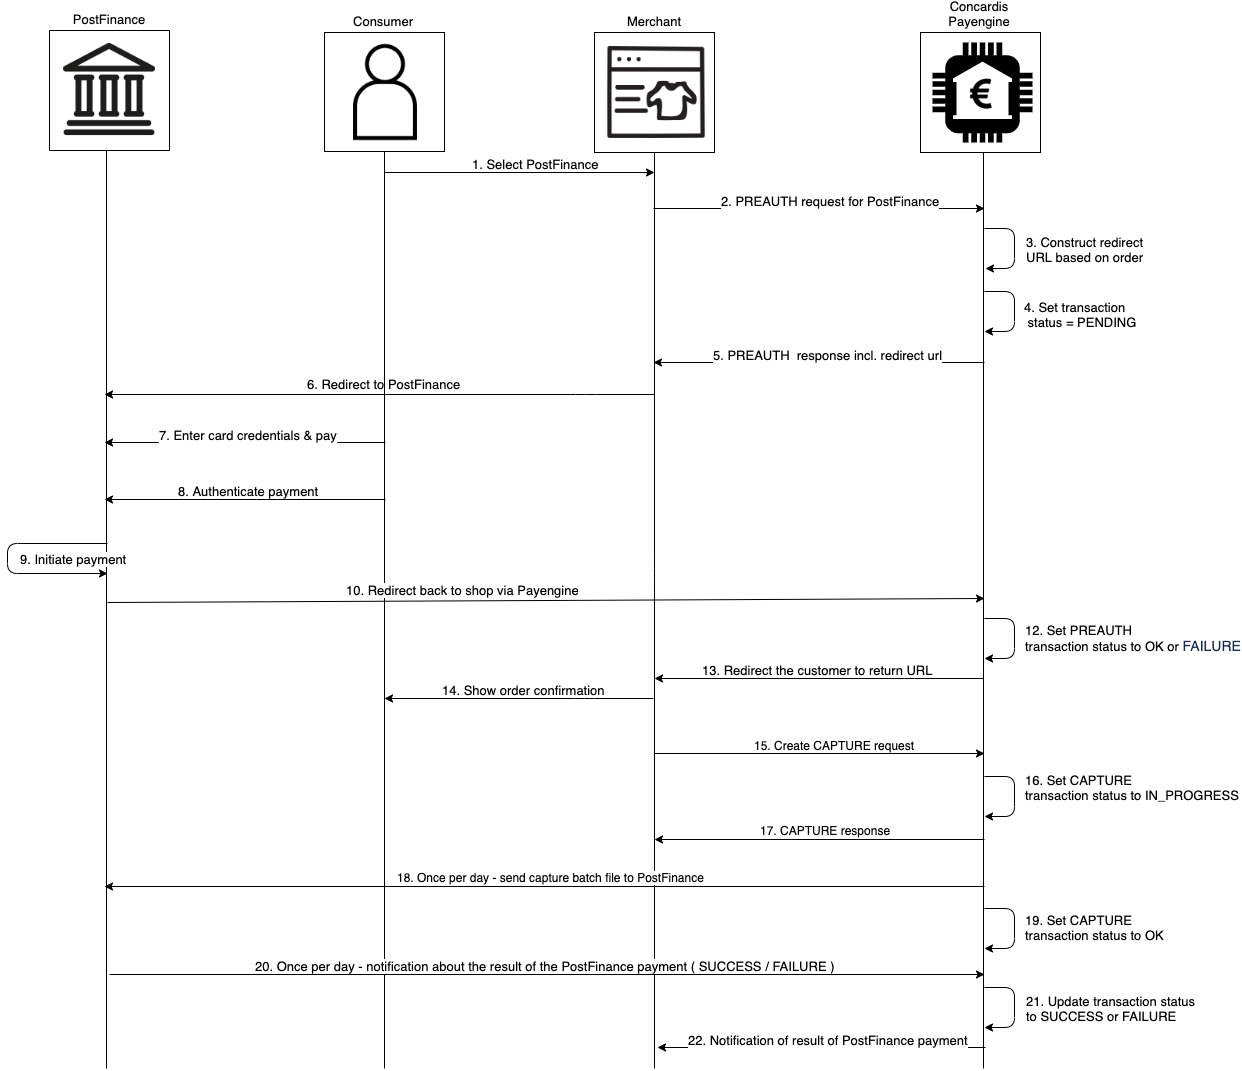 PostFinance IntegrationviaAPI technicalflow